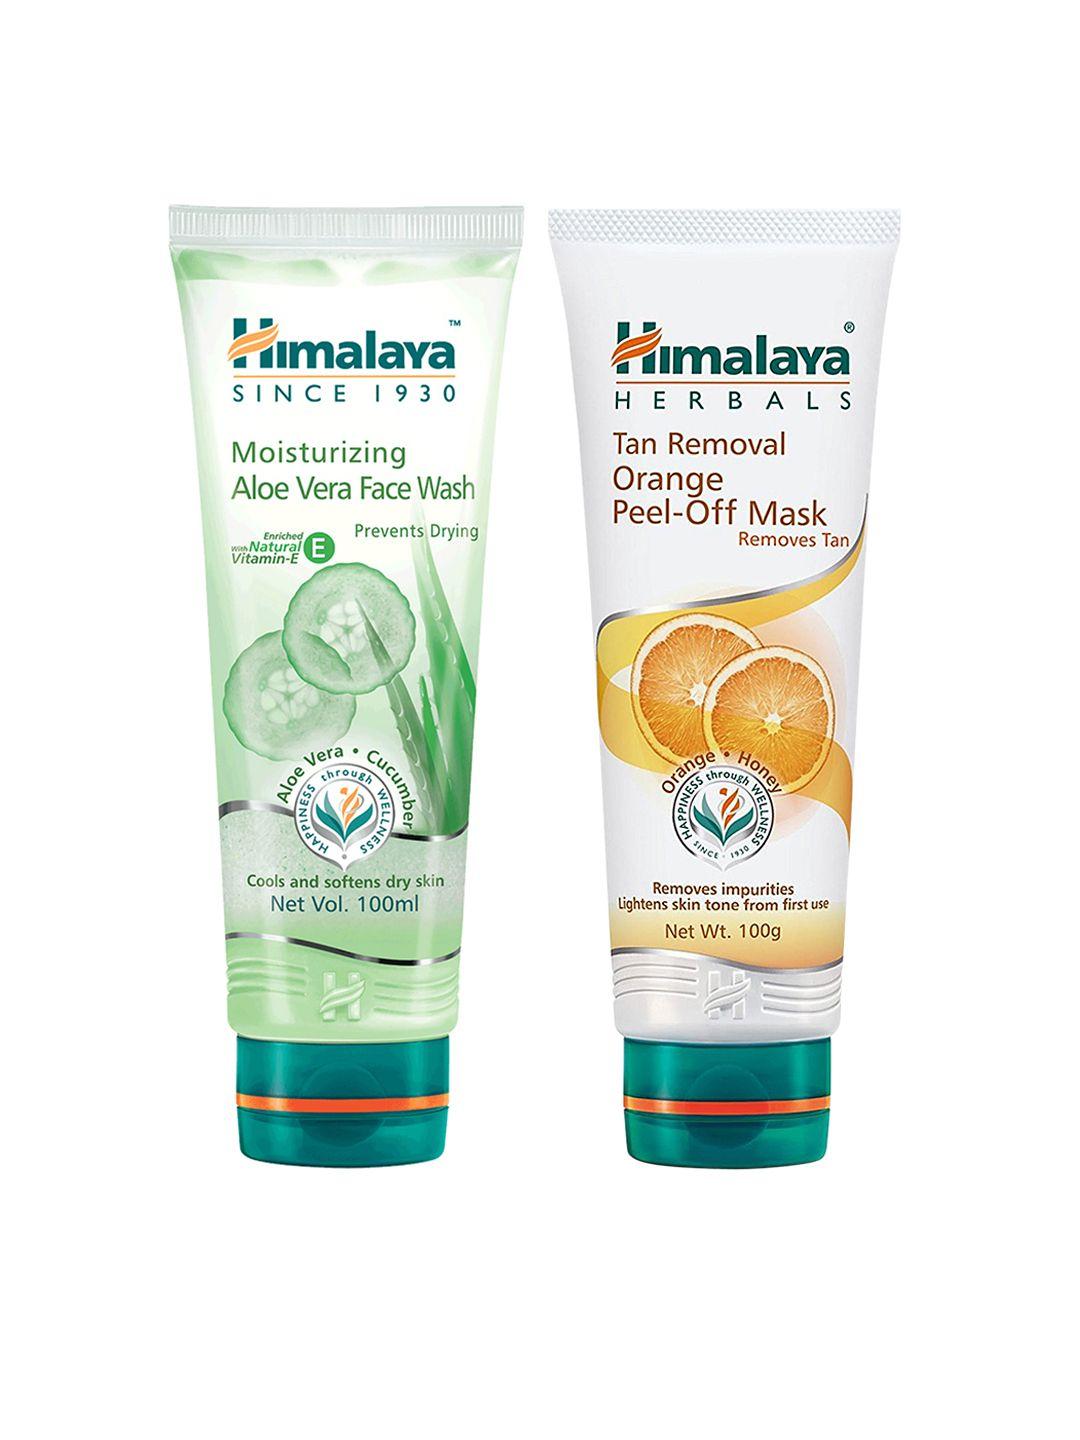 himalaya set of moisturizing aloe vera face wash & tan removal orange peel-off mask